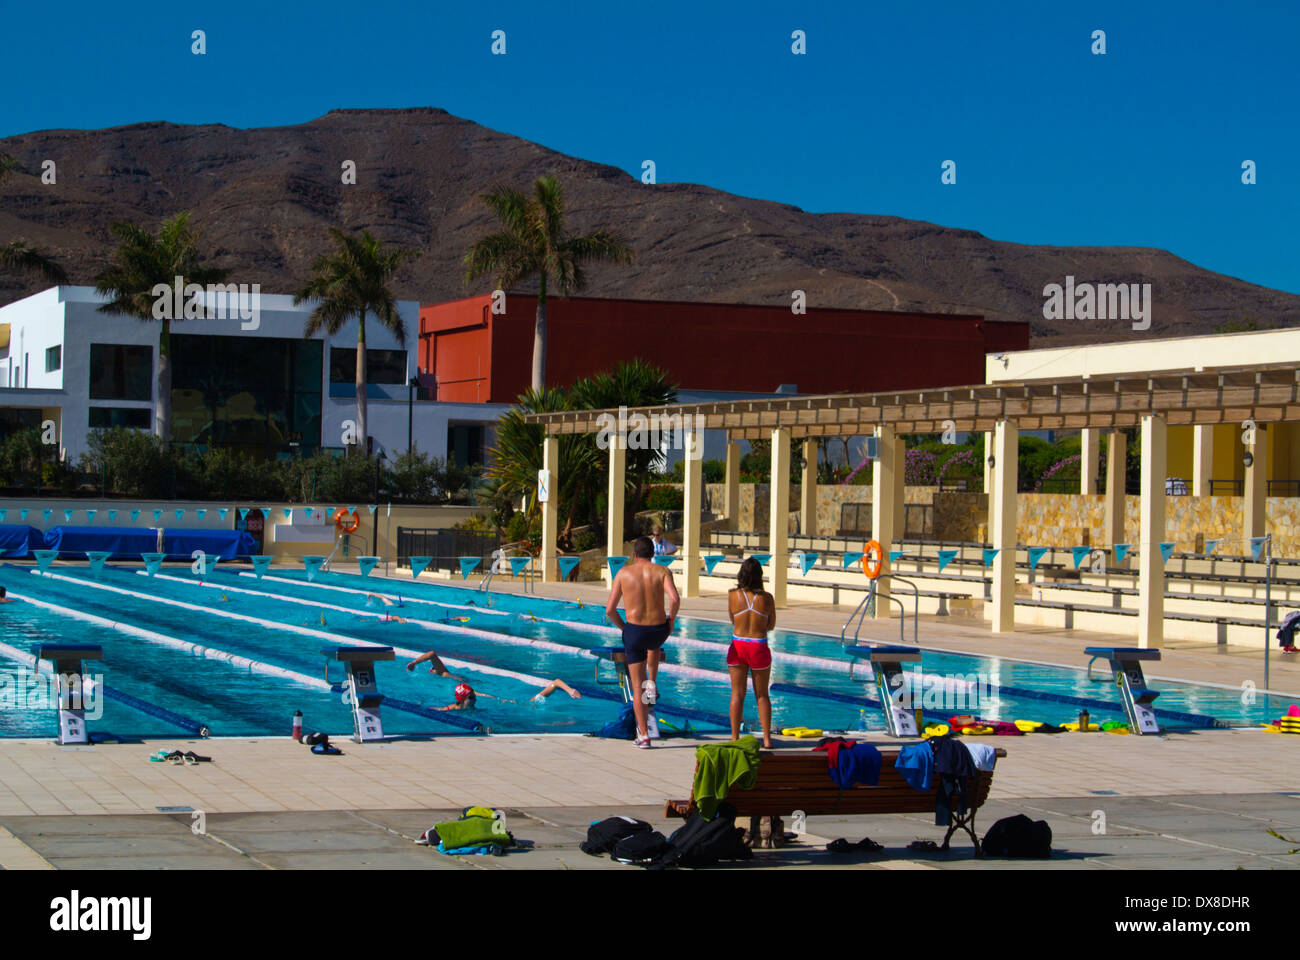 Olympic size swimming pool, Playitas Aparthotel grounds, Las Playitas, Fuerteventura, Canary Islands, Spain, Europe Stock Photo